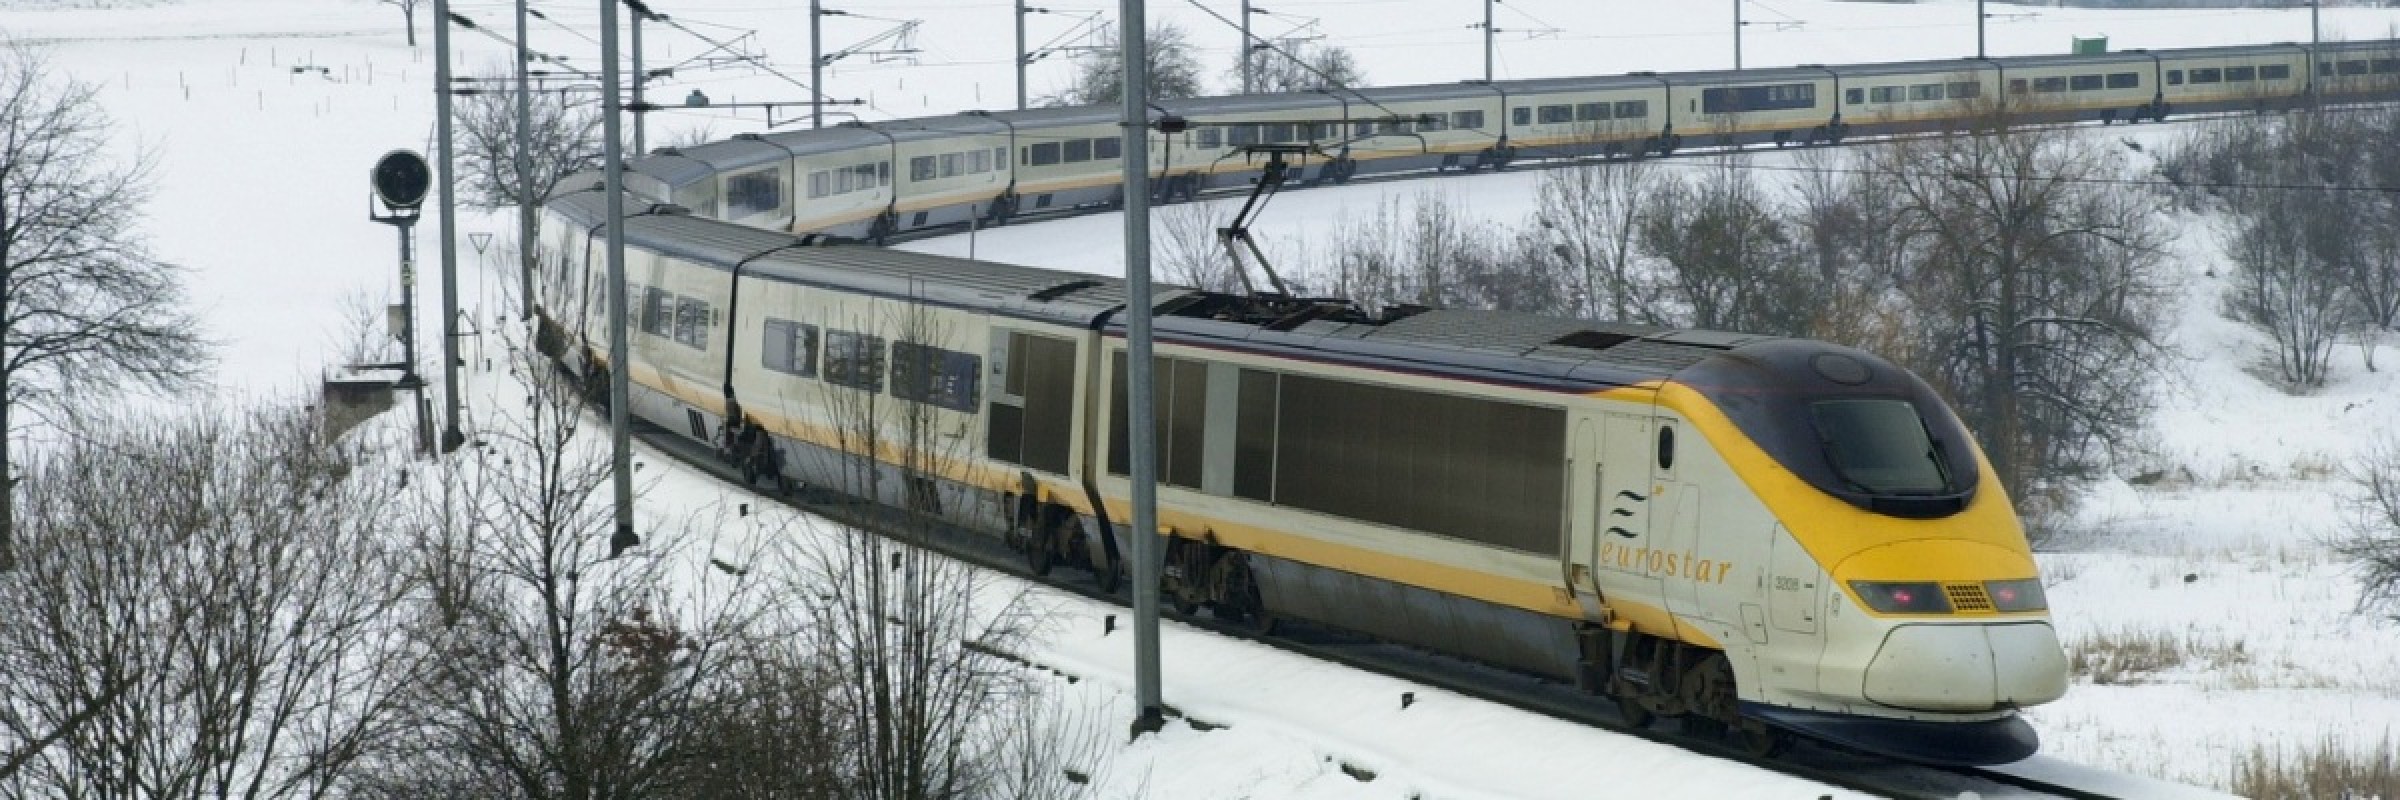 Eurostar snow train service